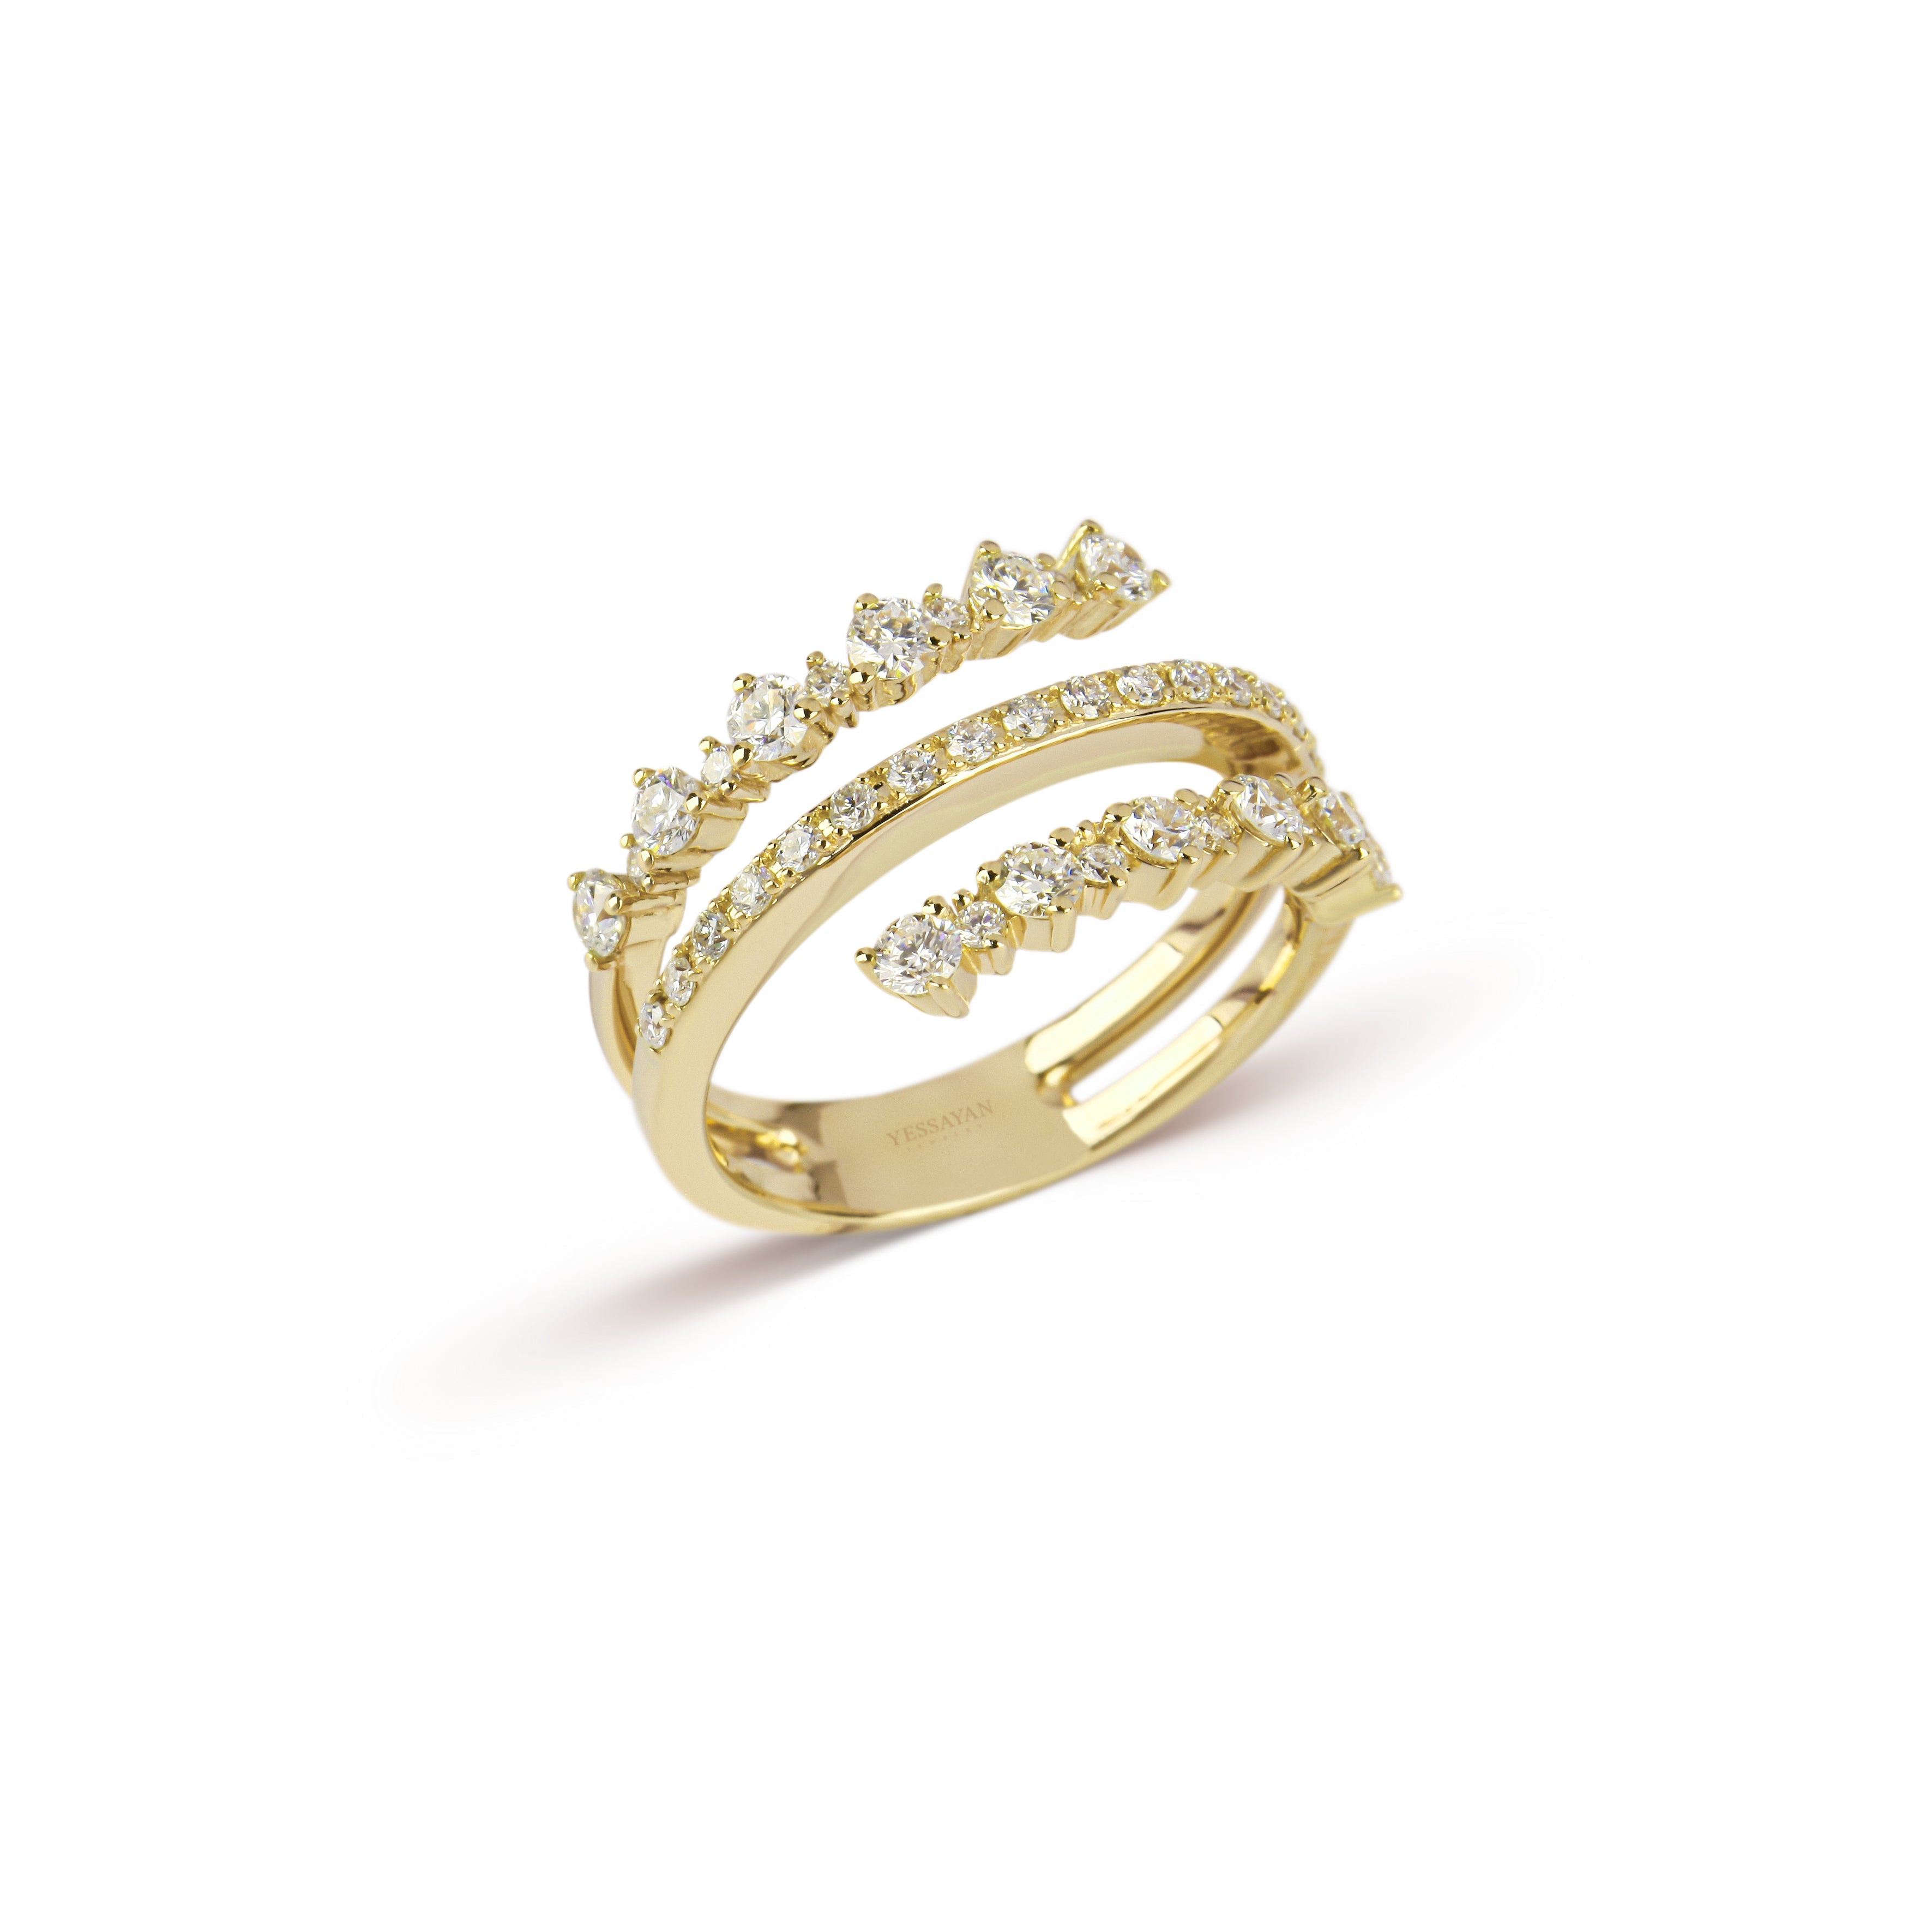 Prolonged Diamond Ring | Buy Rings Online - Latest Designs – YESSAYAN.com